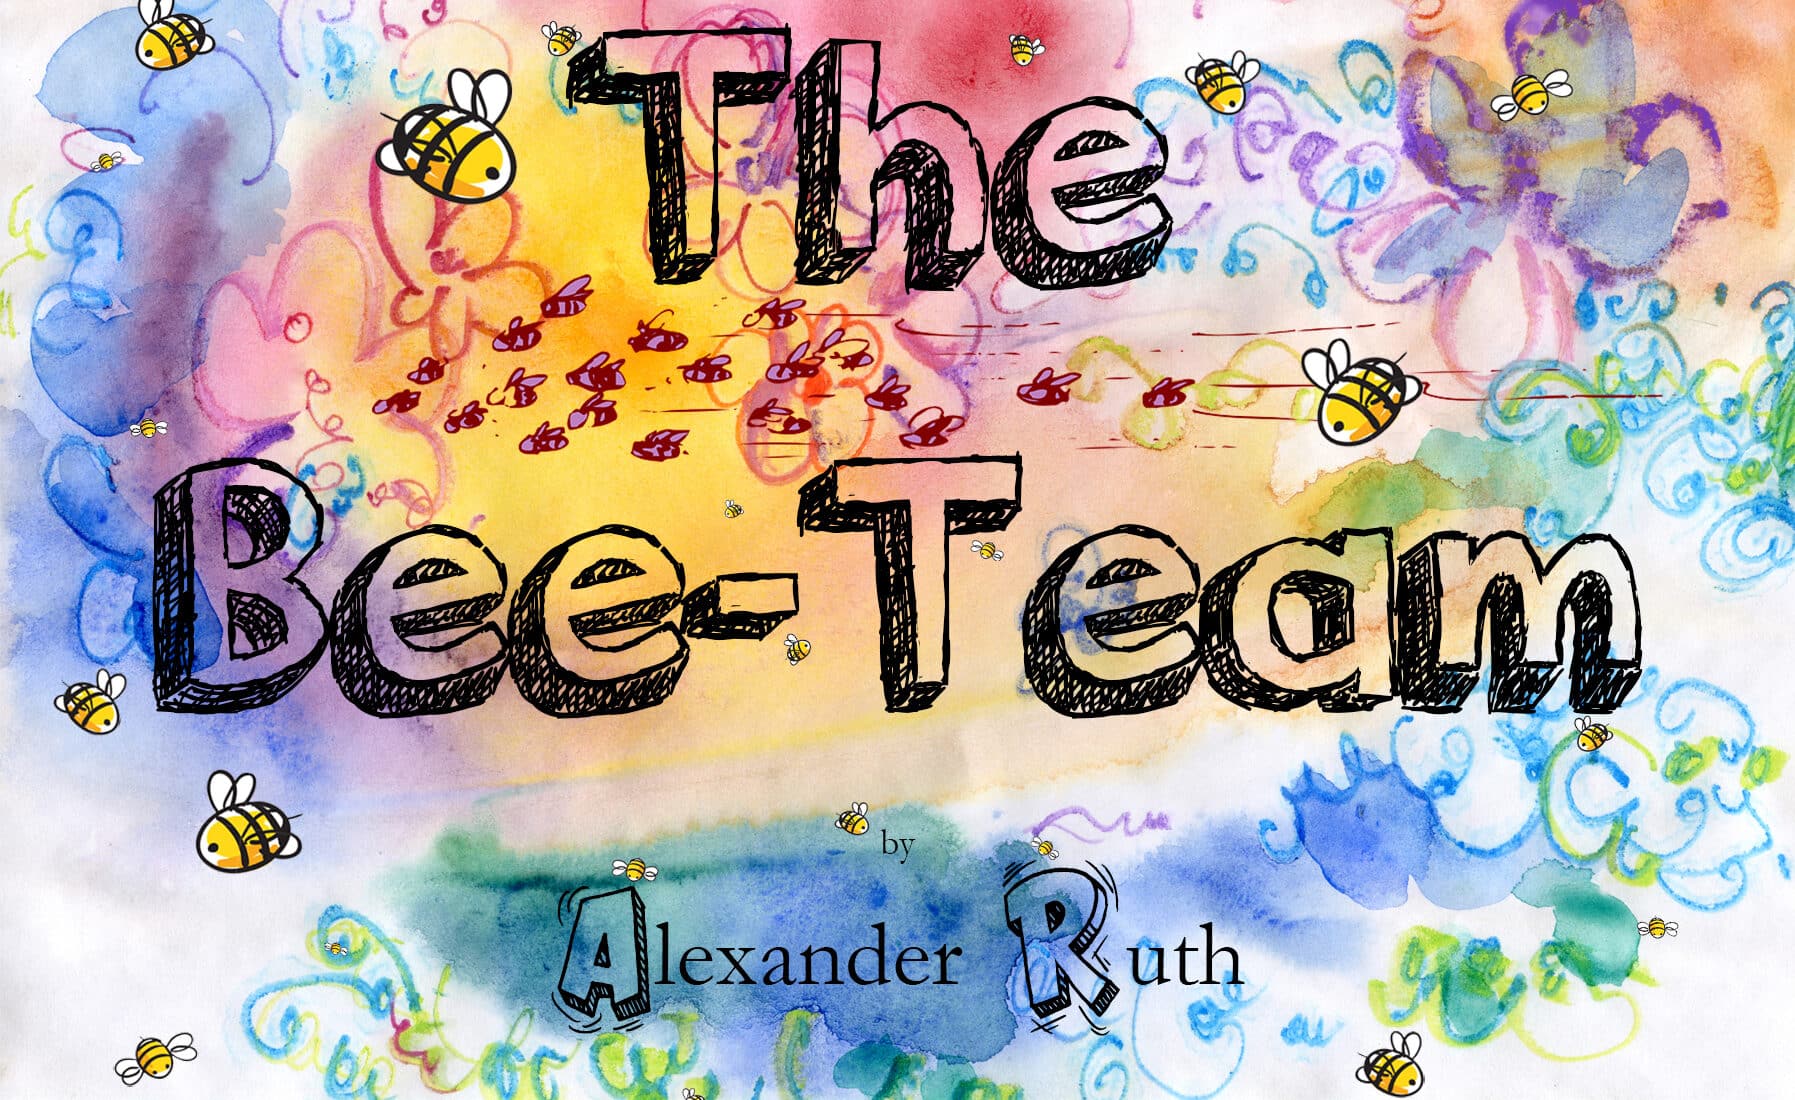 The Bee-Team